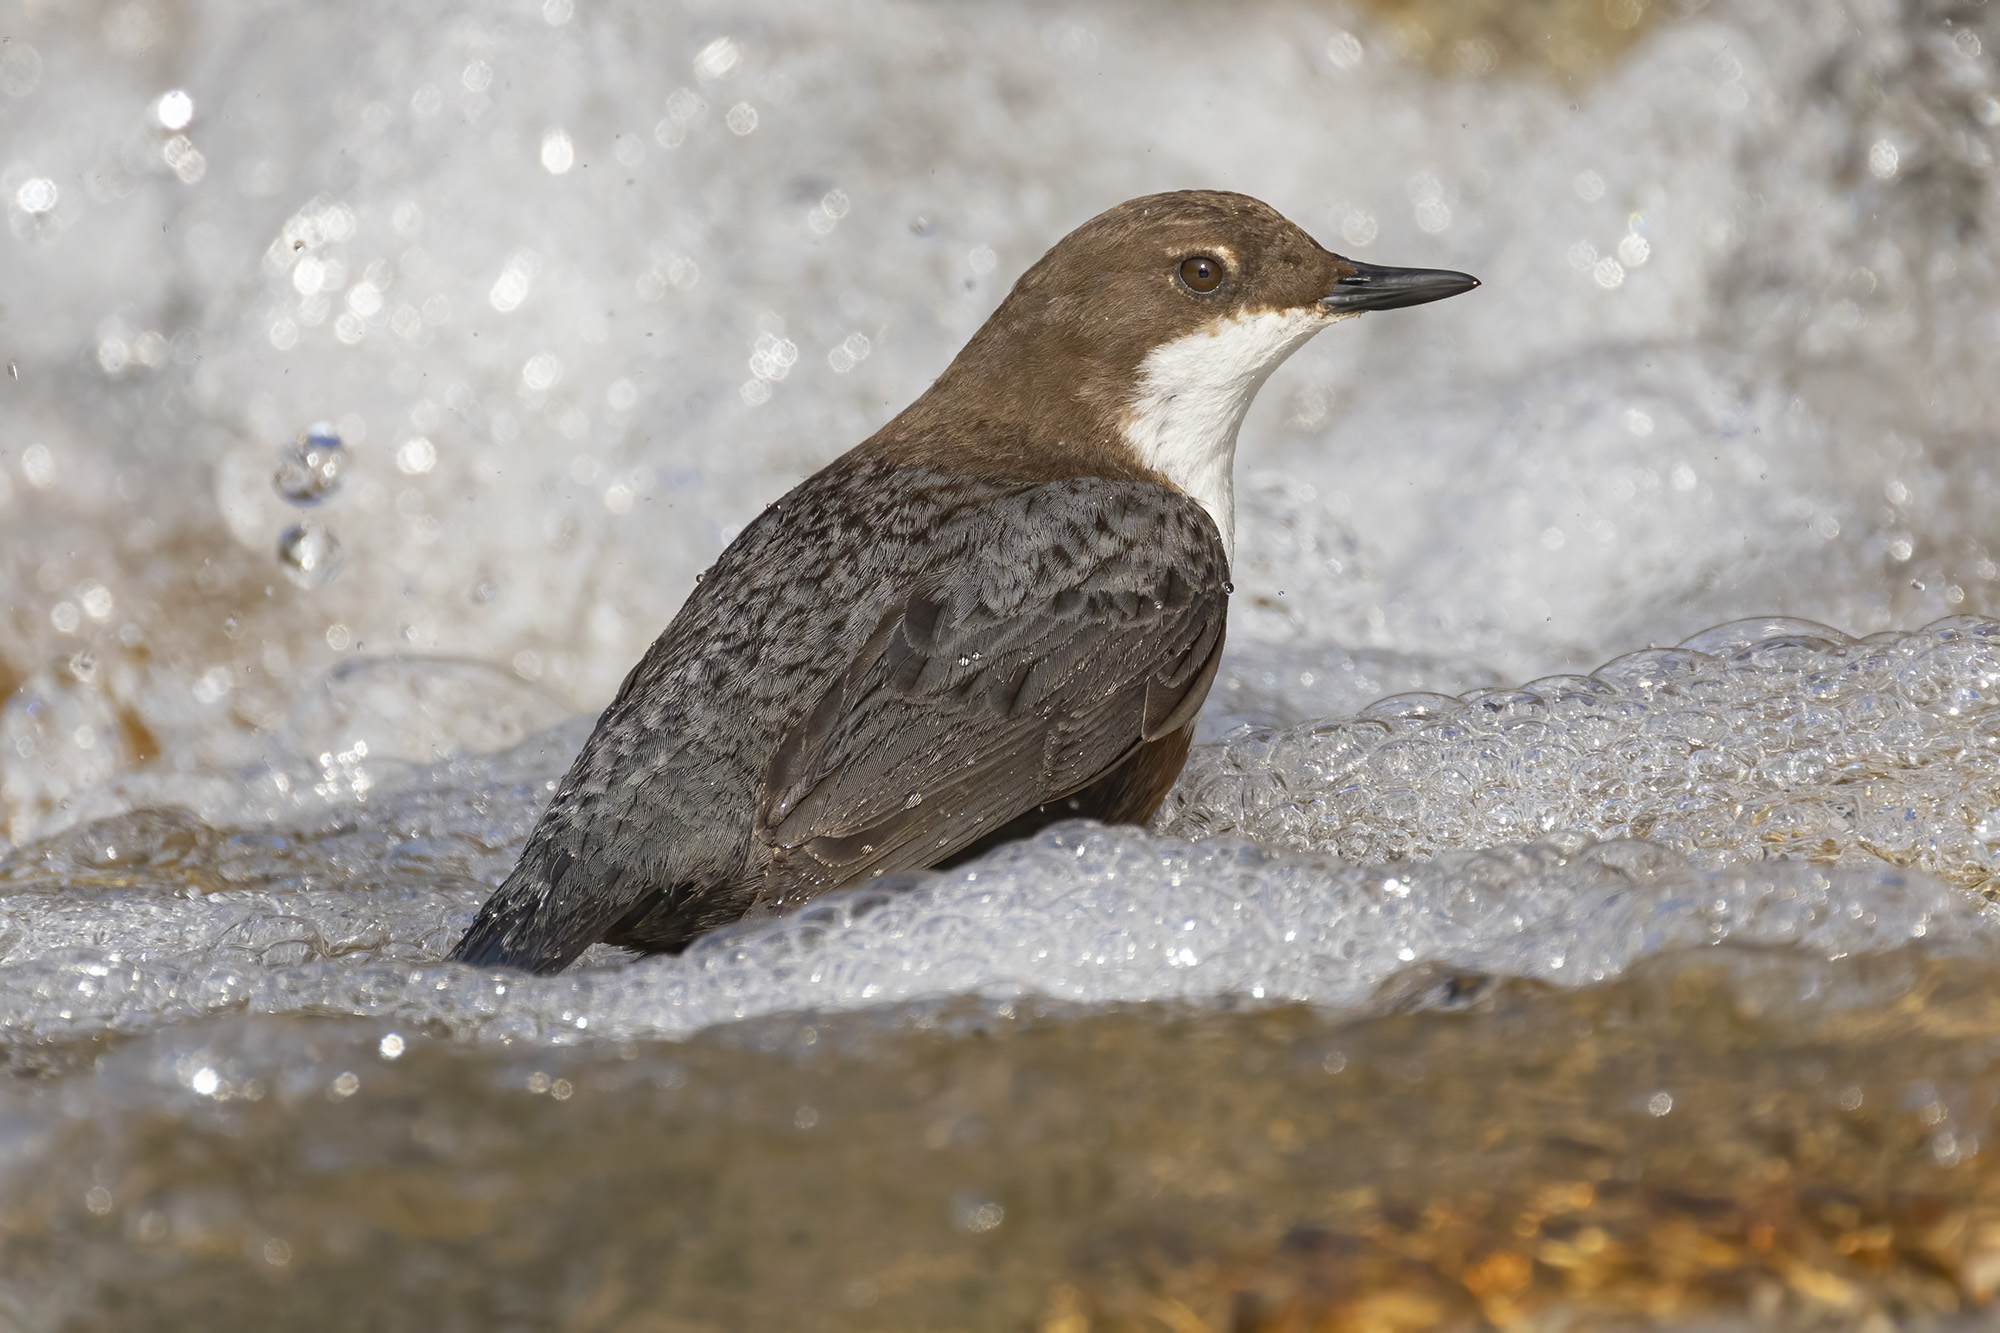 under the waterfall, blackbird ascquaiolo...